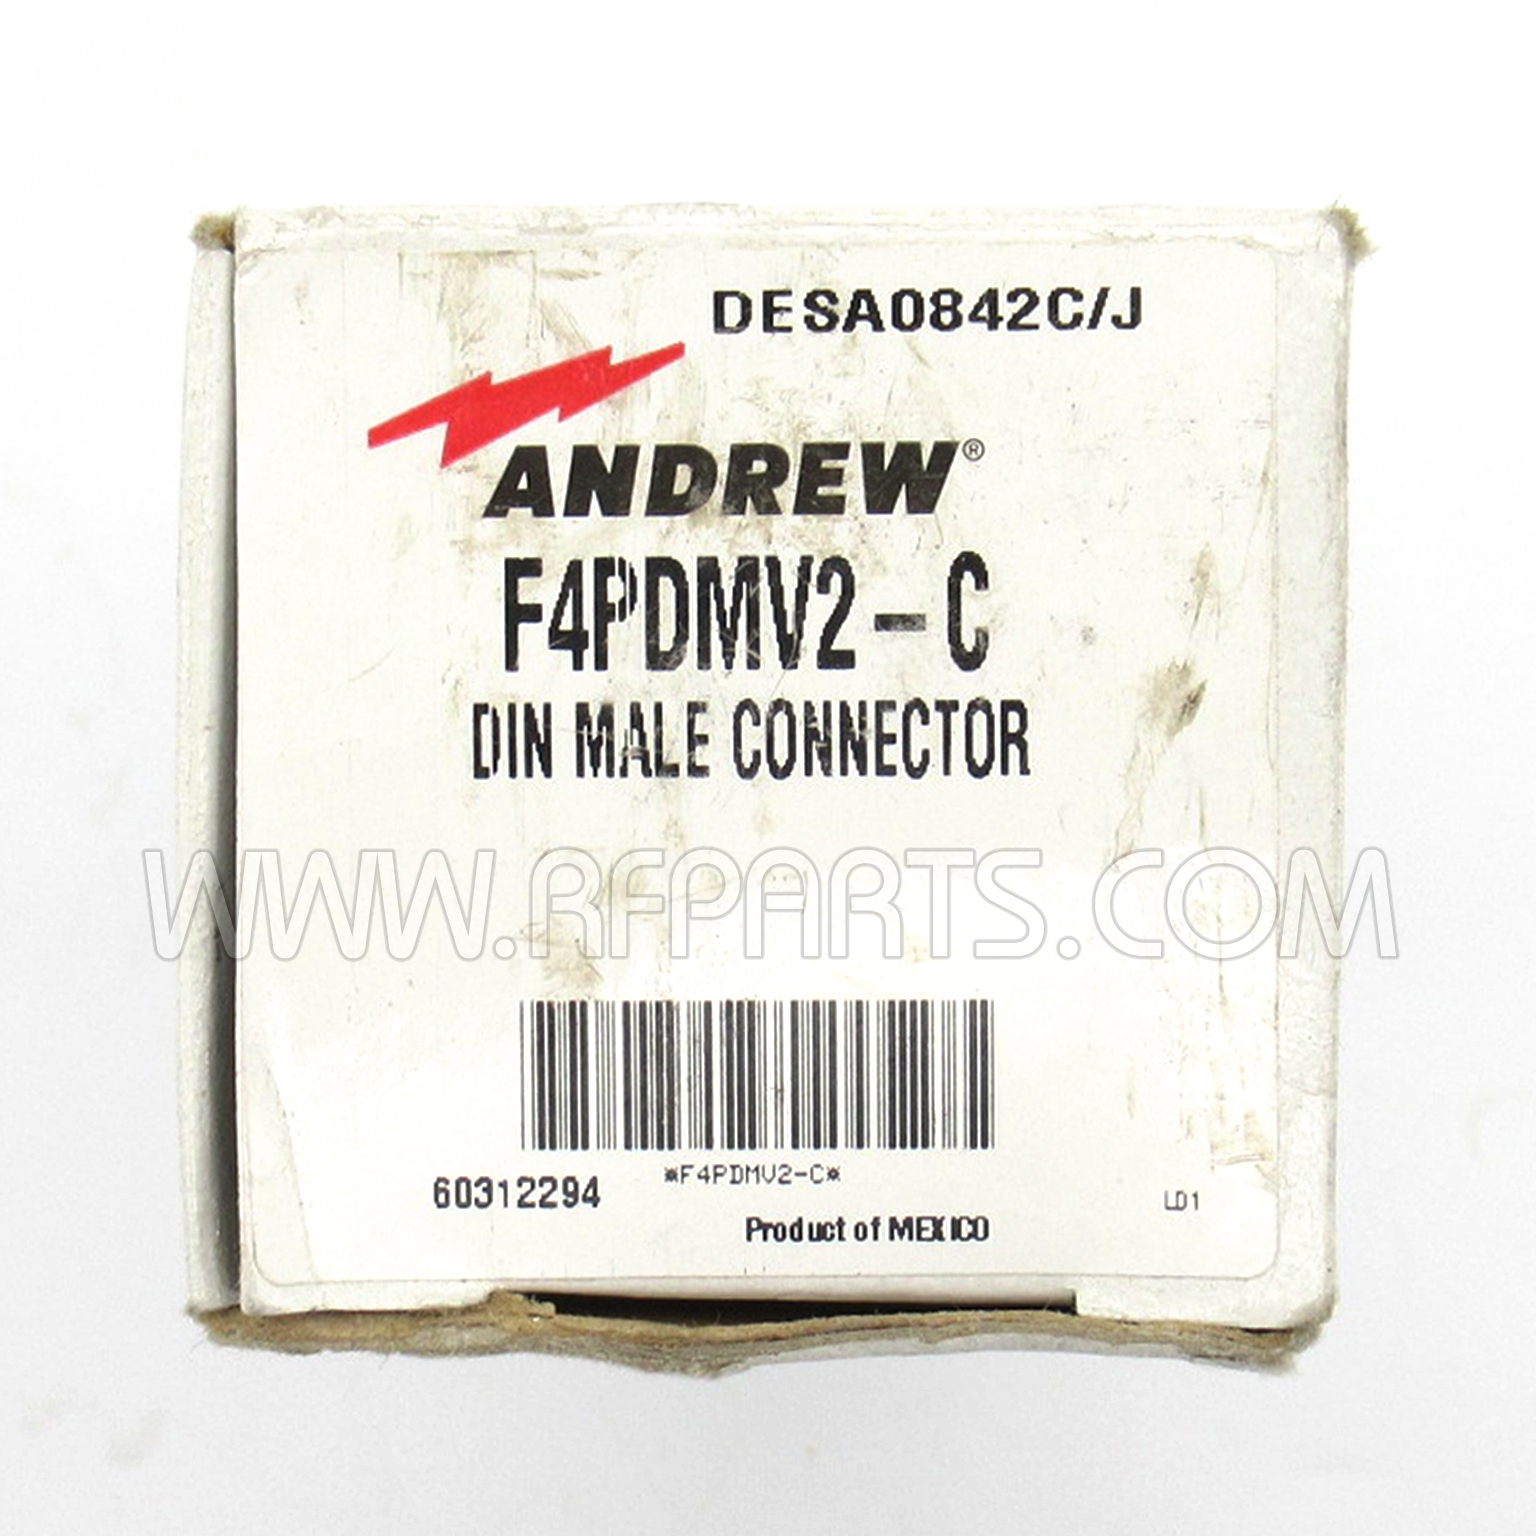 ANDREW F4PDMV2-C Din-Male Connector for Heliax FSJ4-50B Coax 